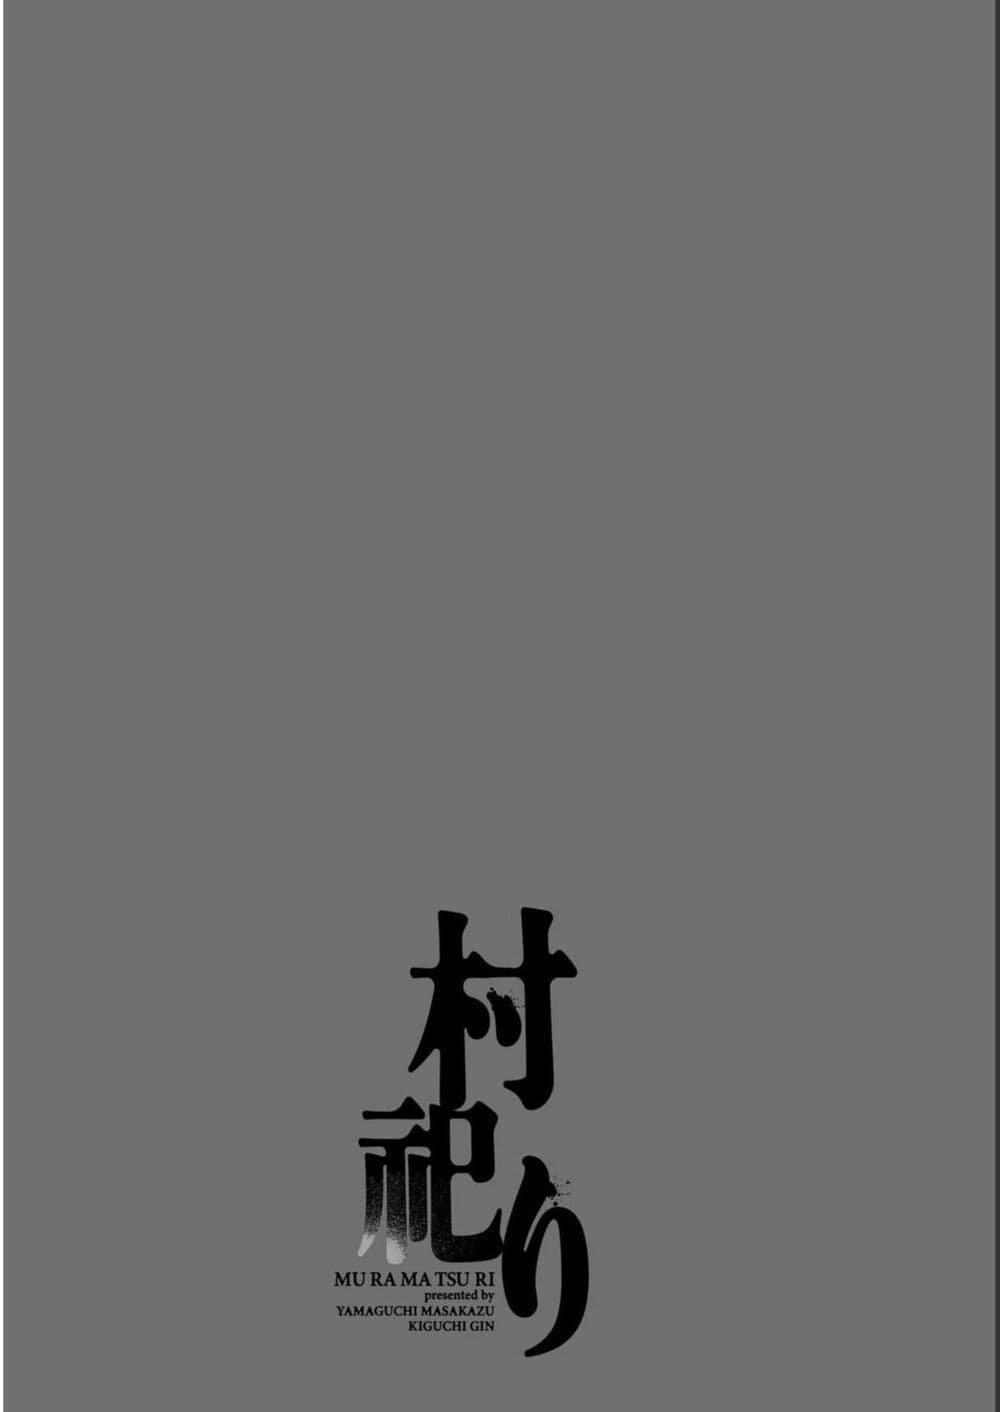 Mura Matsuri 19.20 (20)